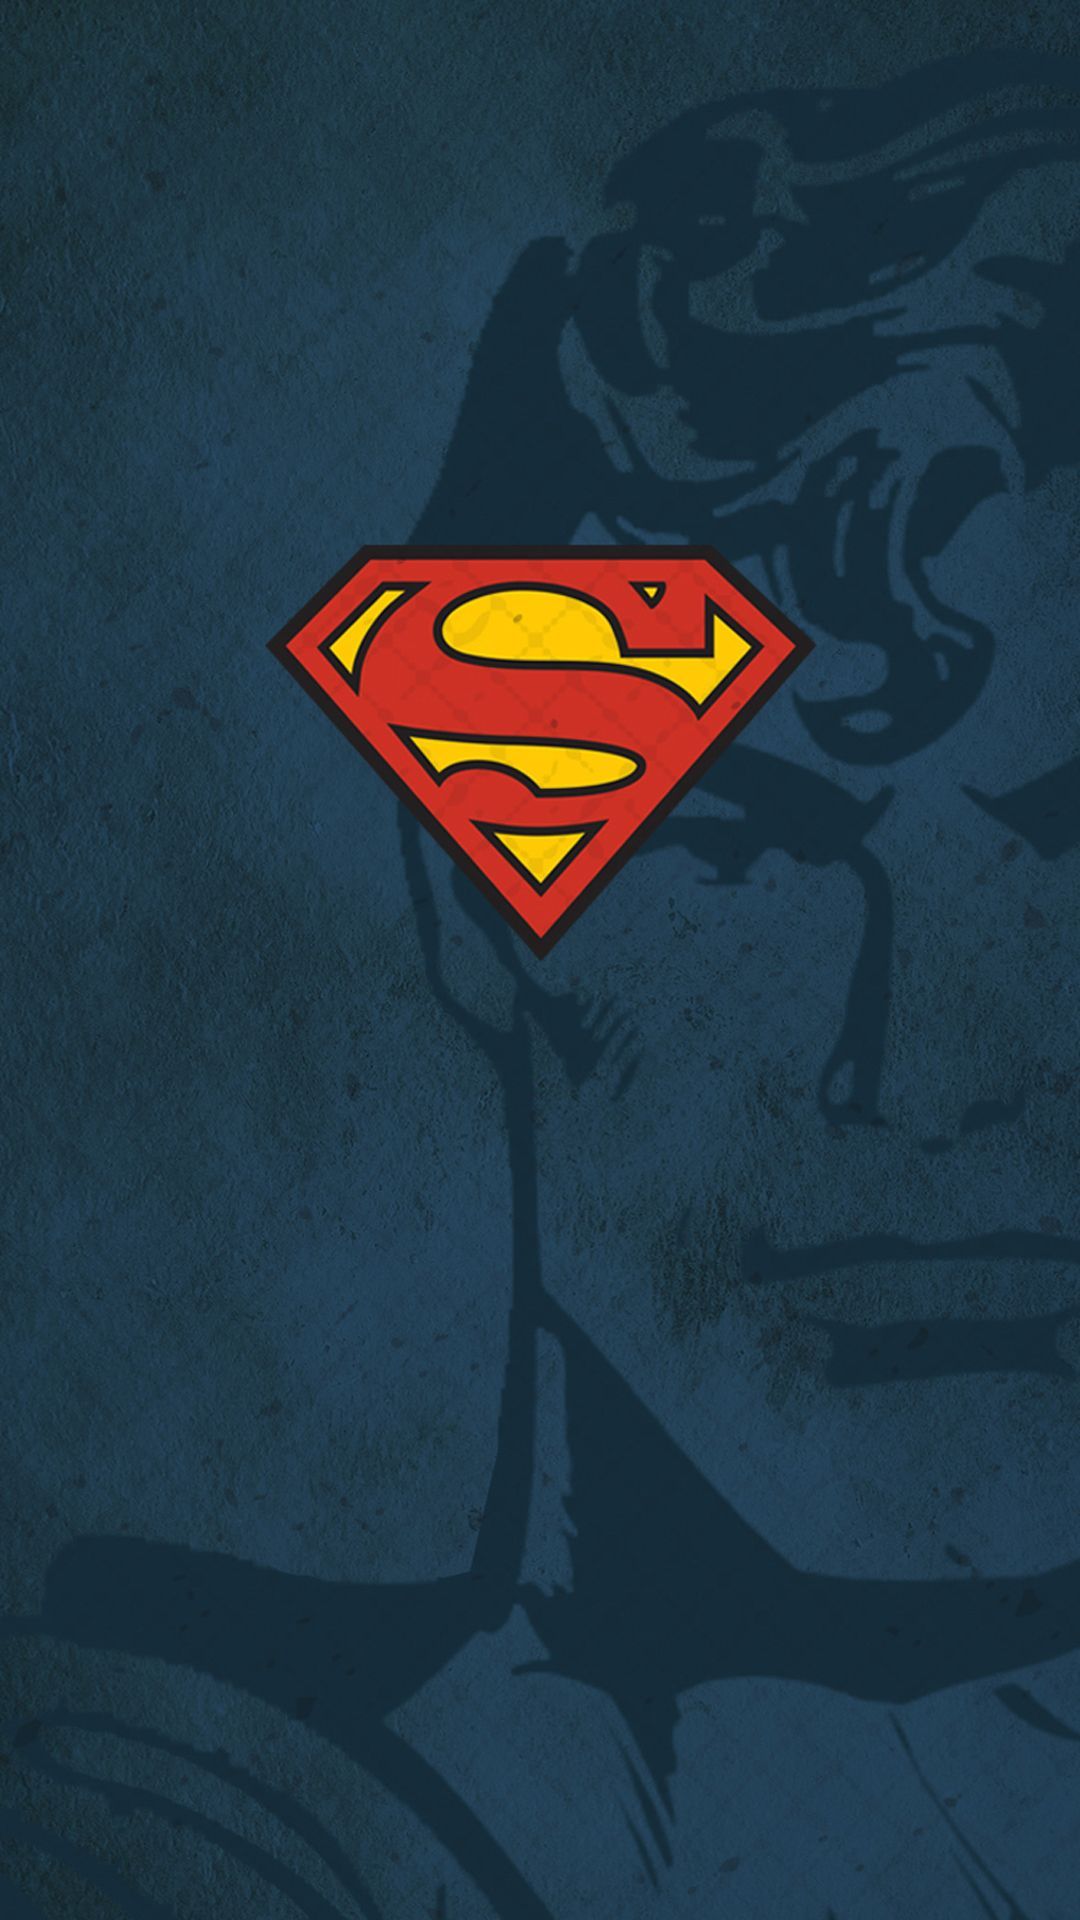 Superman 01 - iPhone 6 Plus | Fondos de DC Comics para iPhone | Imágenes